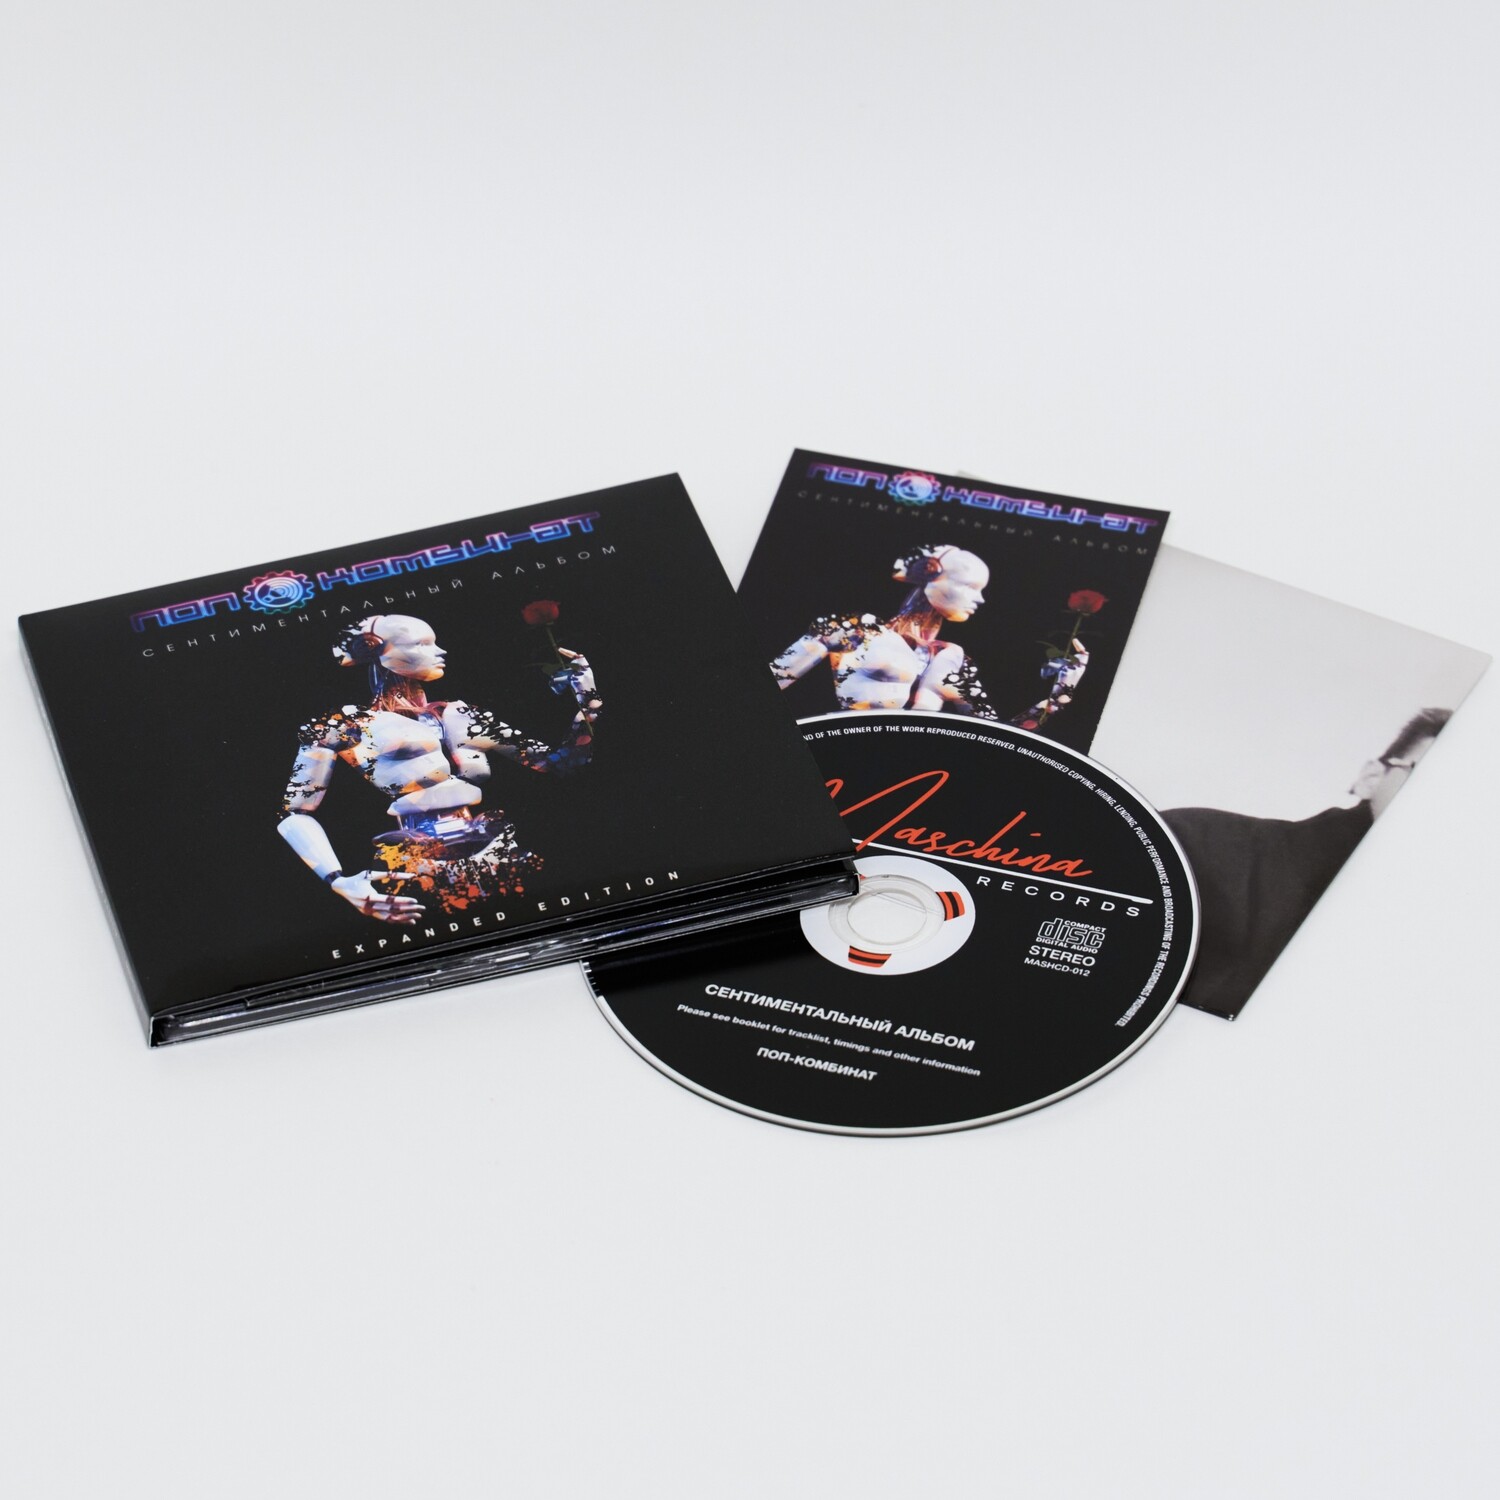 CD: Поп-Комбинат — «Сентиментальный альбом» (1987/2017) [Limited Expanded Edition]